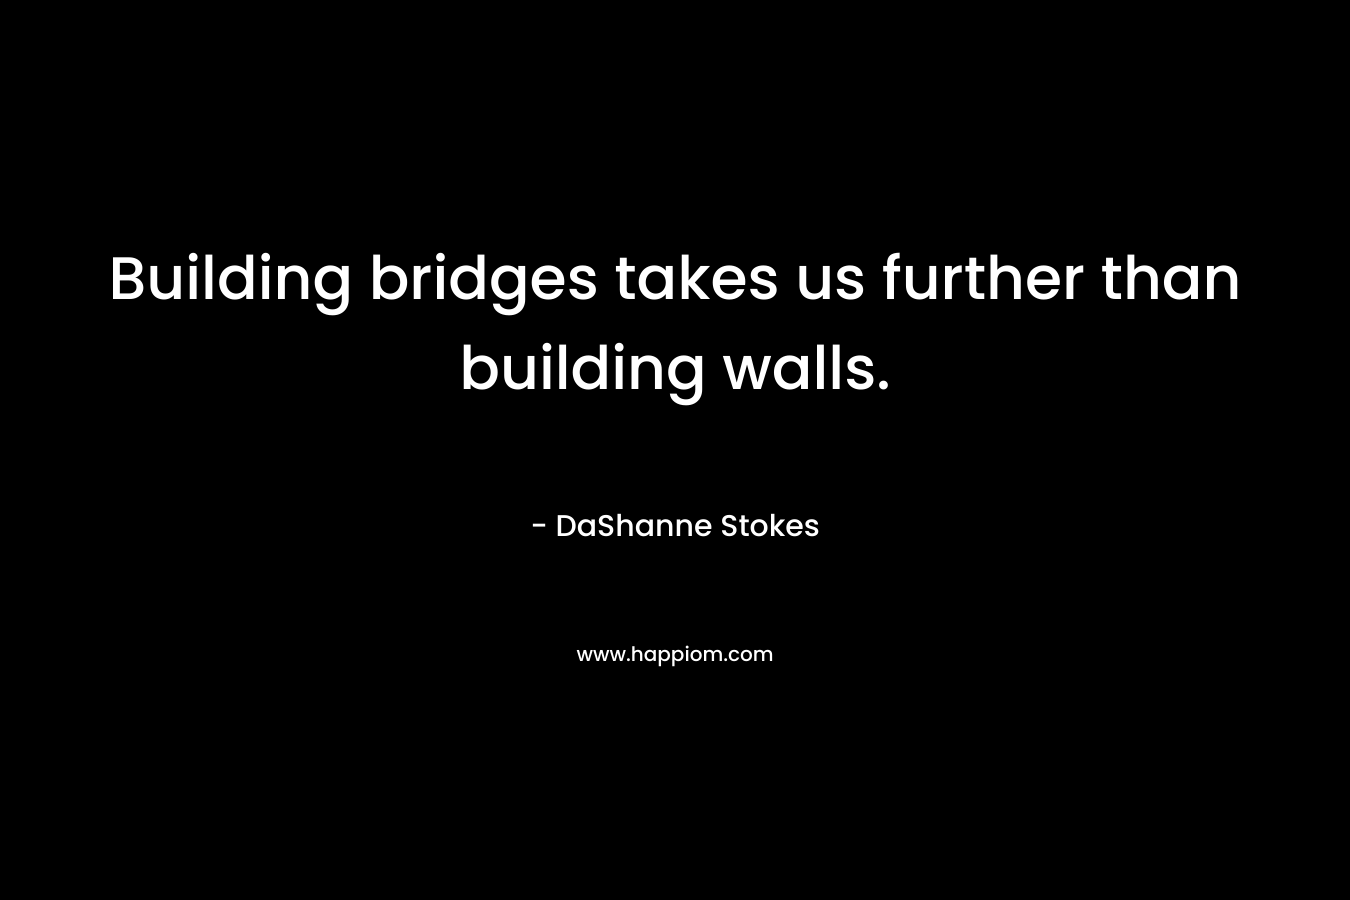 Building bridges takes us further than building walls.